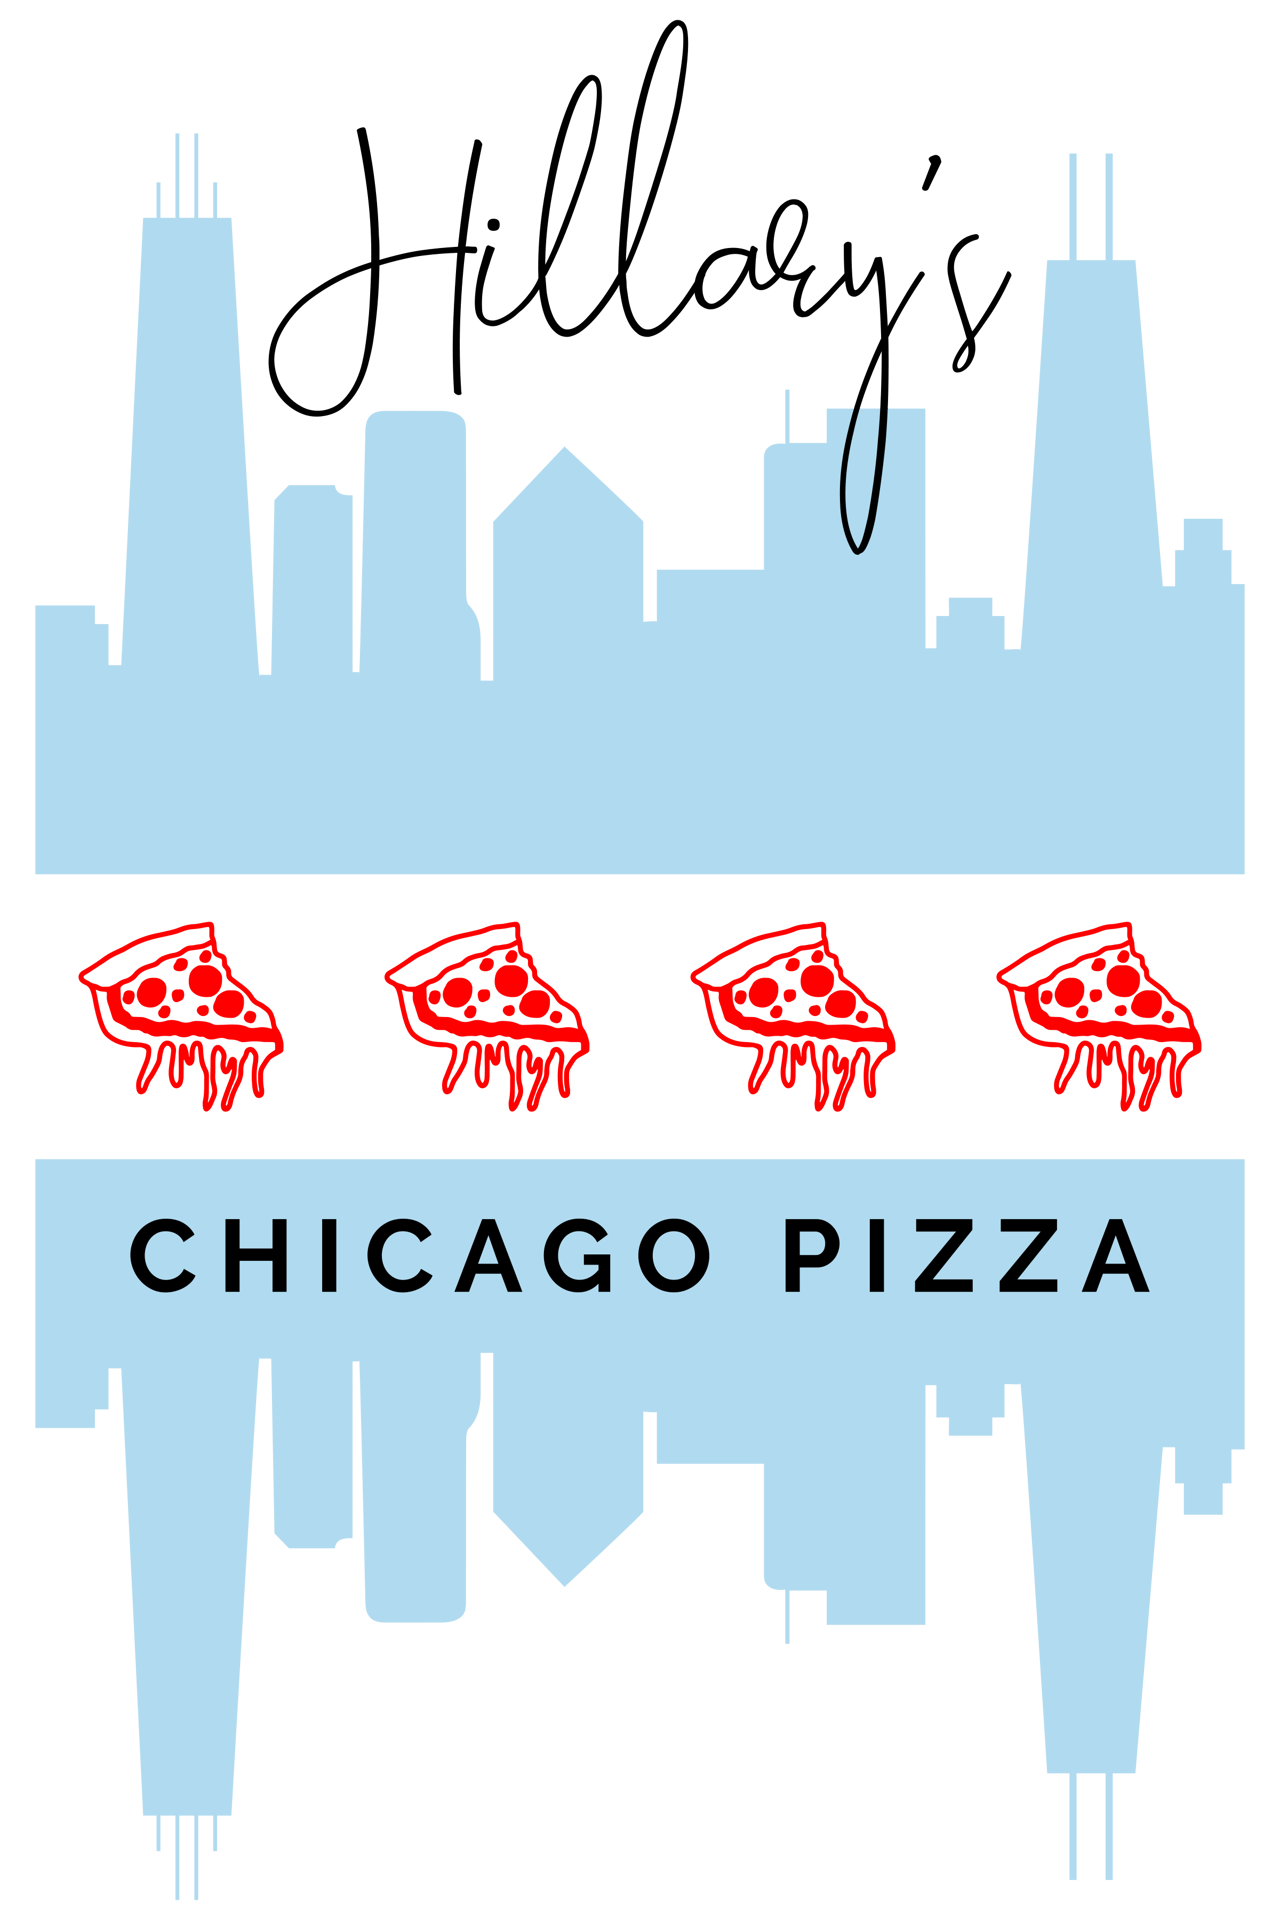 Hillary's Chicago Pizza logo